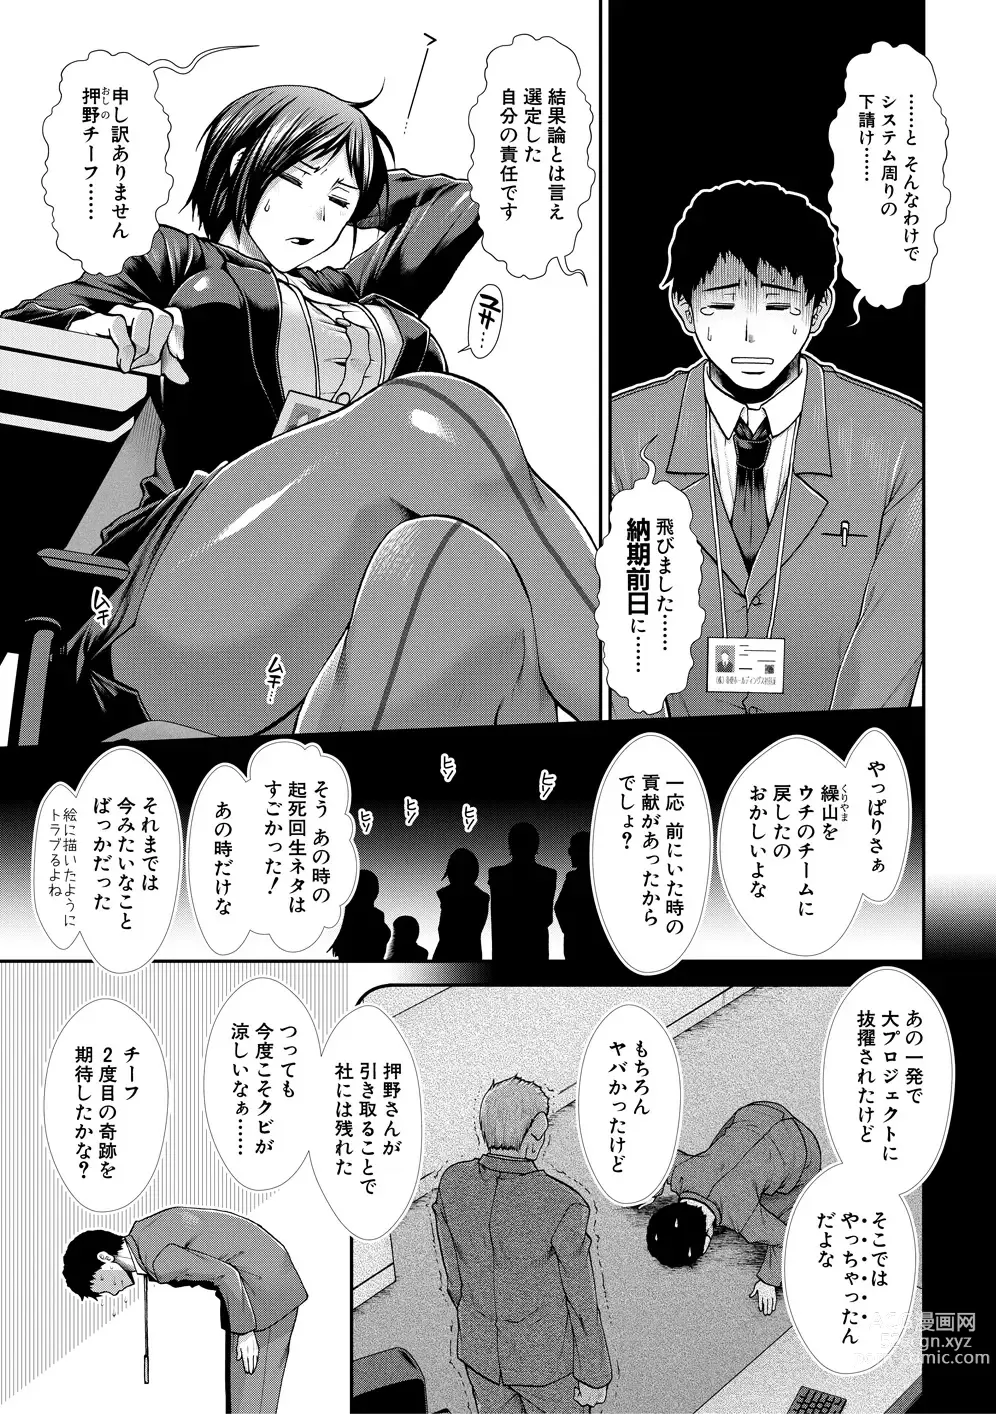 Page 5 of manga Ketsuhara